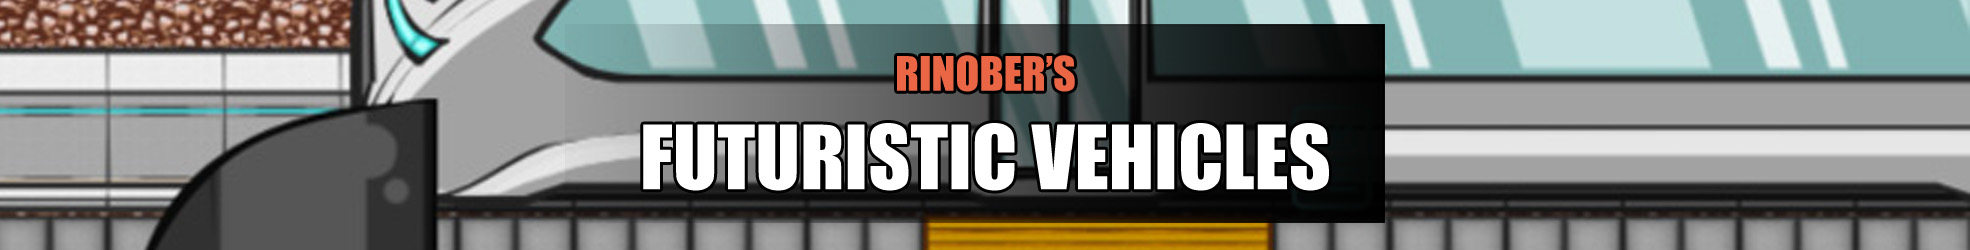 Rinober's Futuristic Vehicles